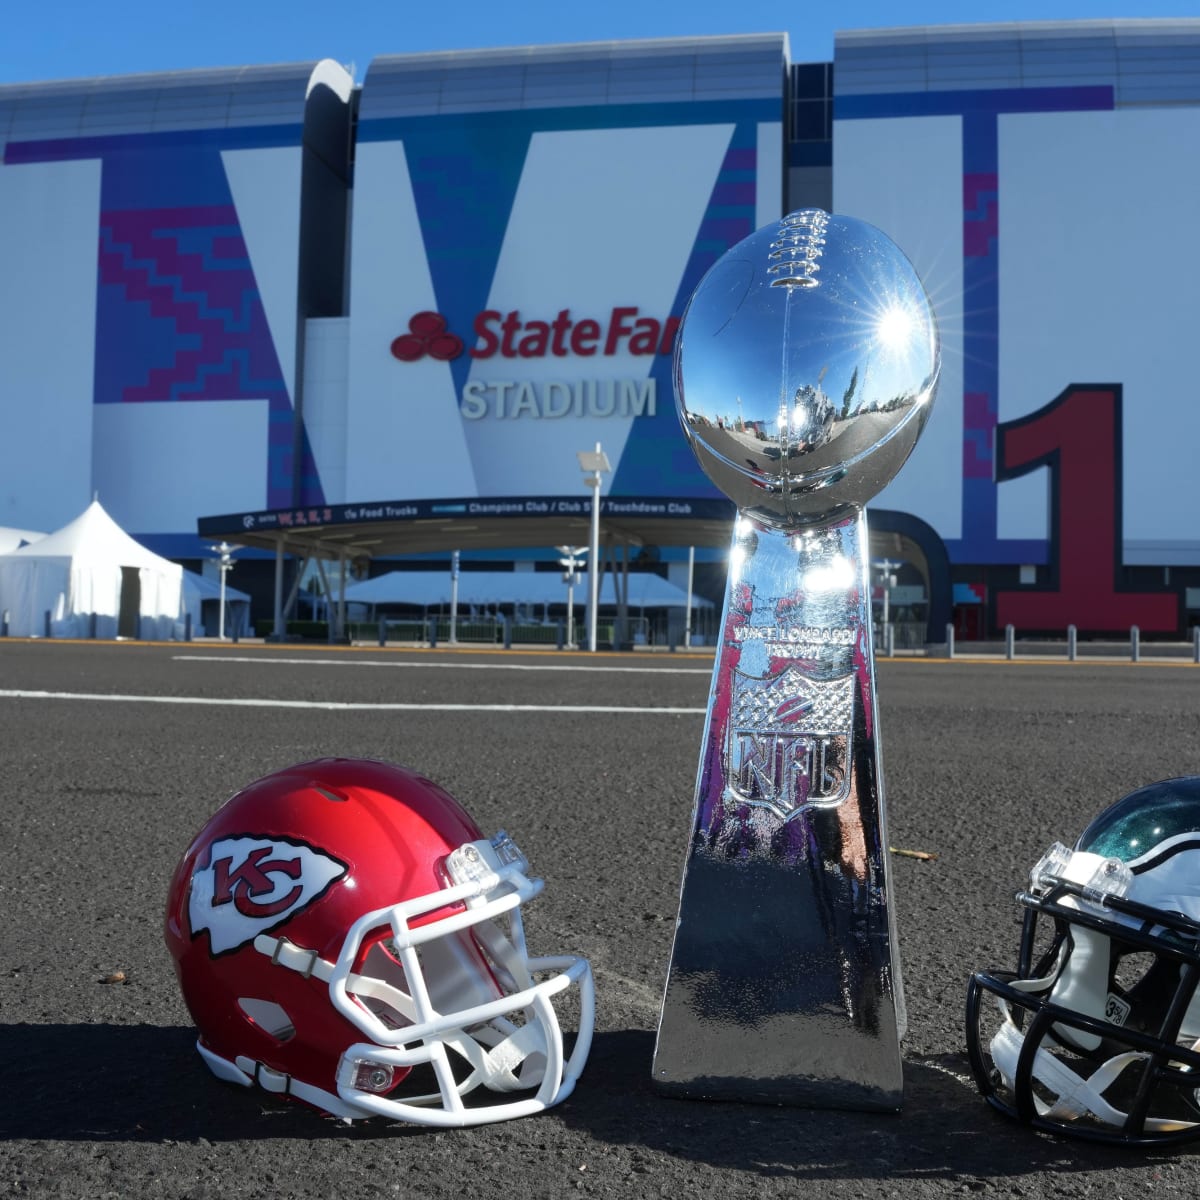 Super Bowl 57 On Sale Gear, Super Bowl Discount Deals from NFL Shop